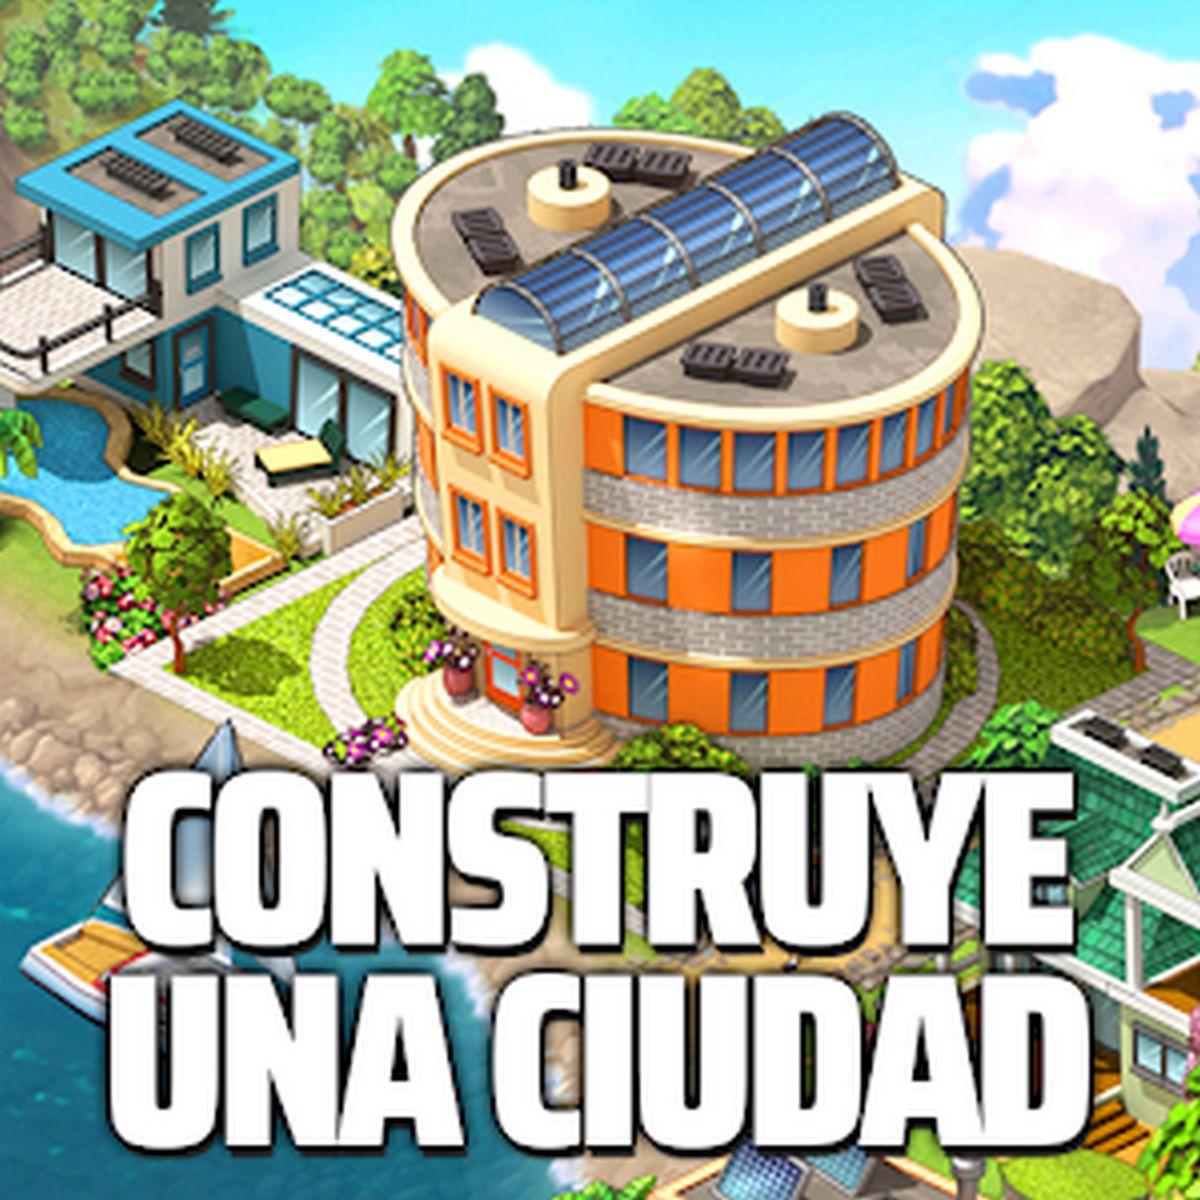 City Island 5 – Tycoon Building Offline Sim Game APK MOD v3.4.2